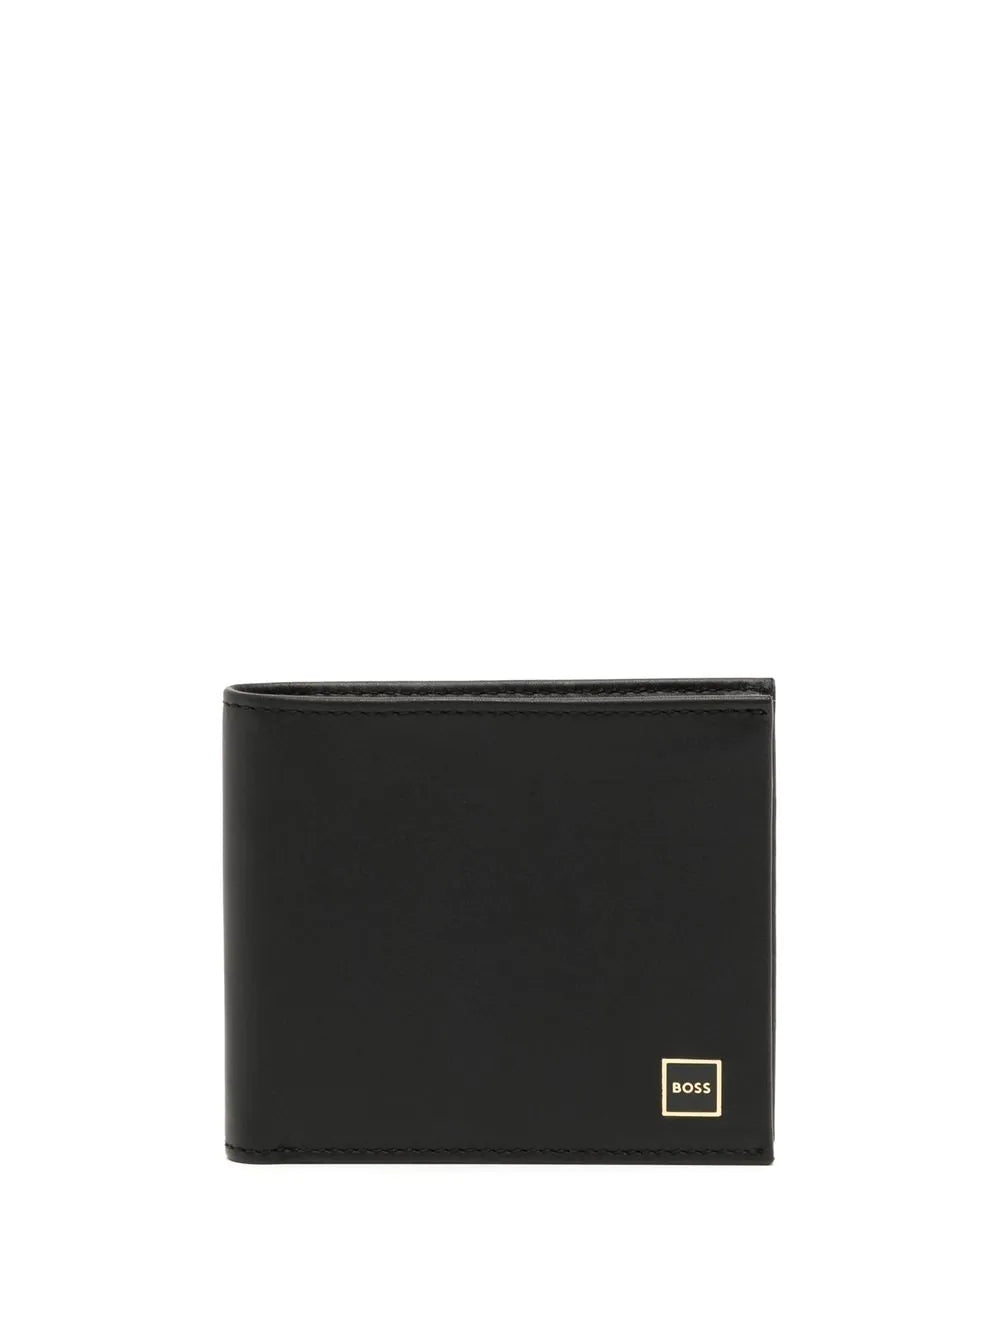 BOSS Leather Wallet Black - MAISONDEFASHION.COM